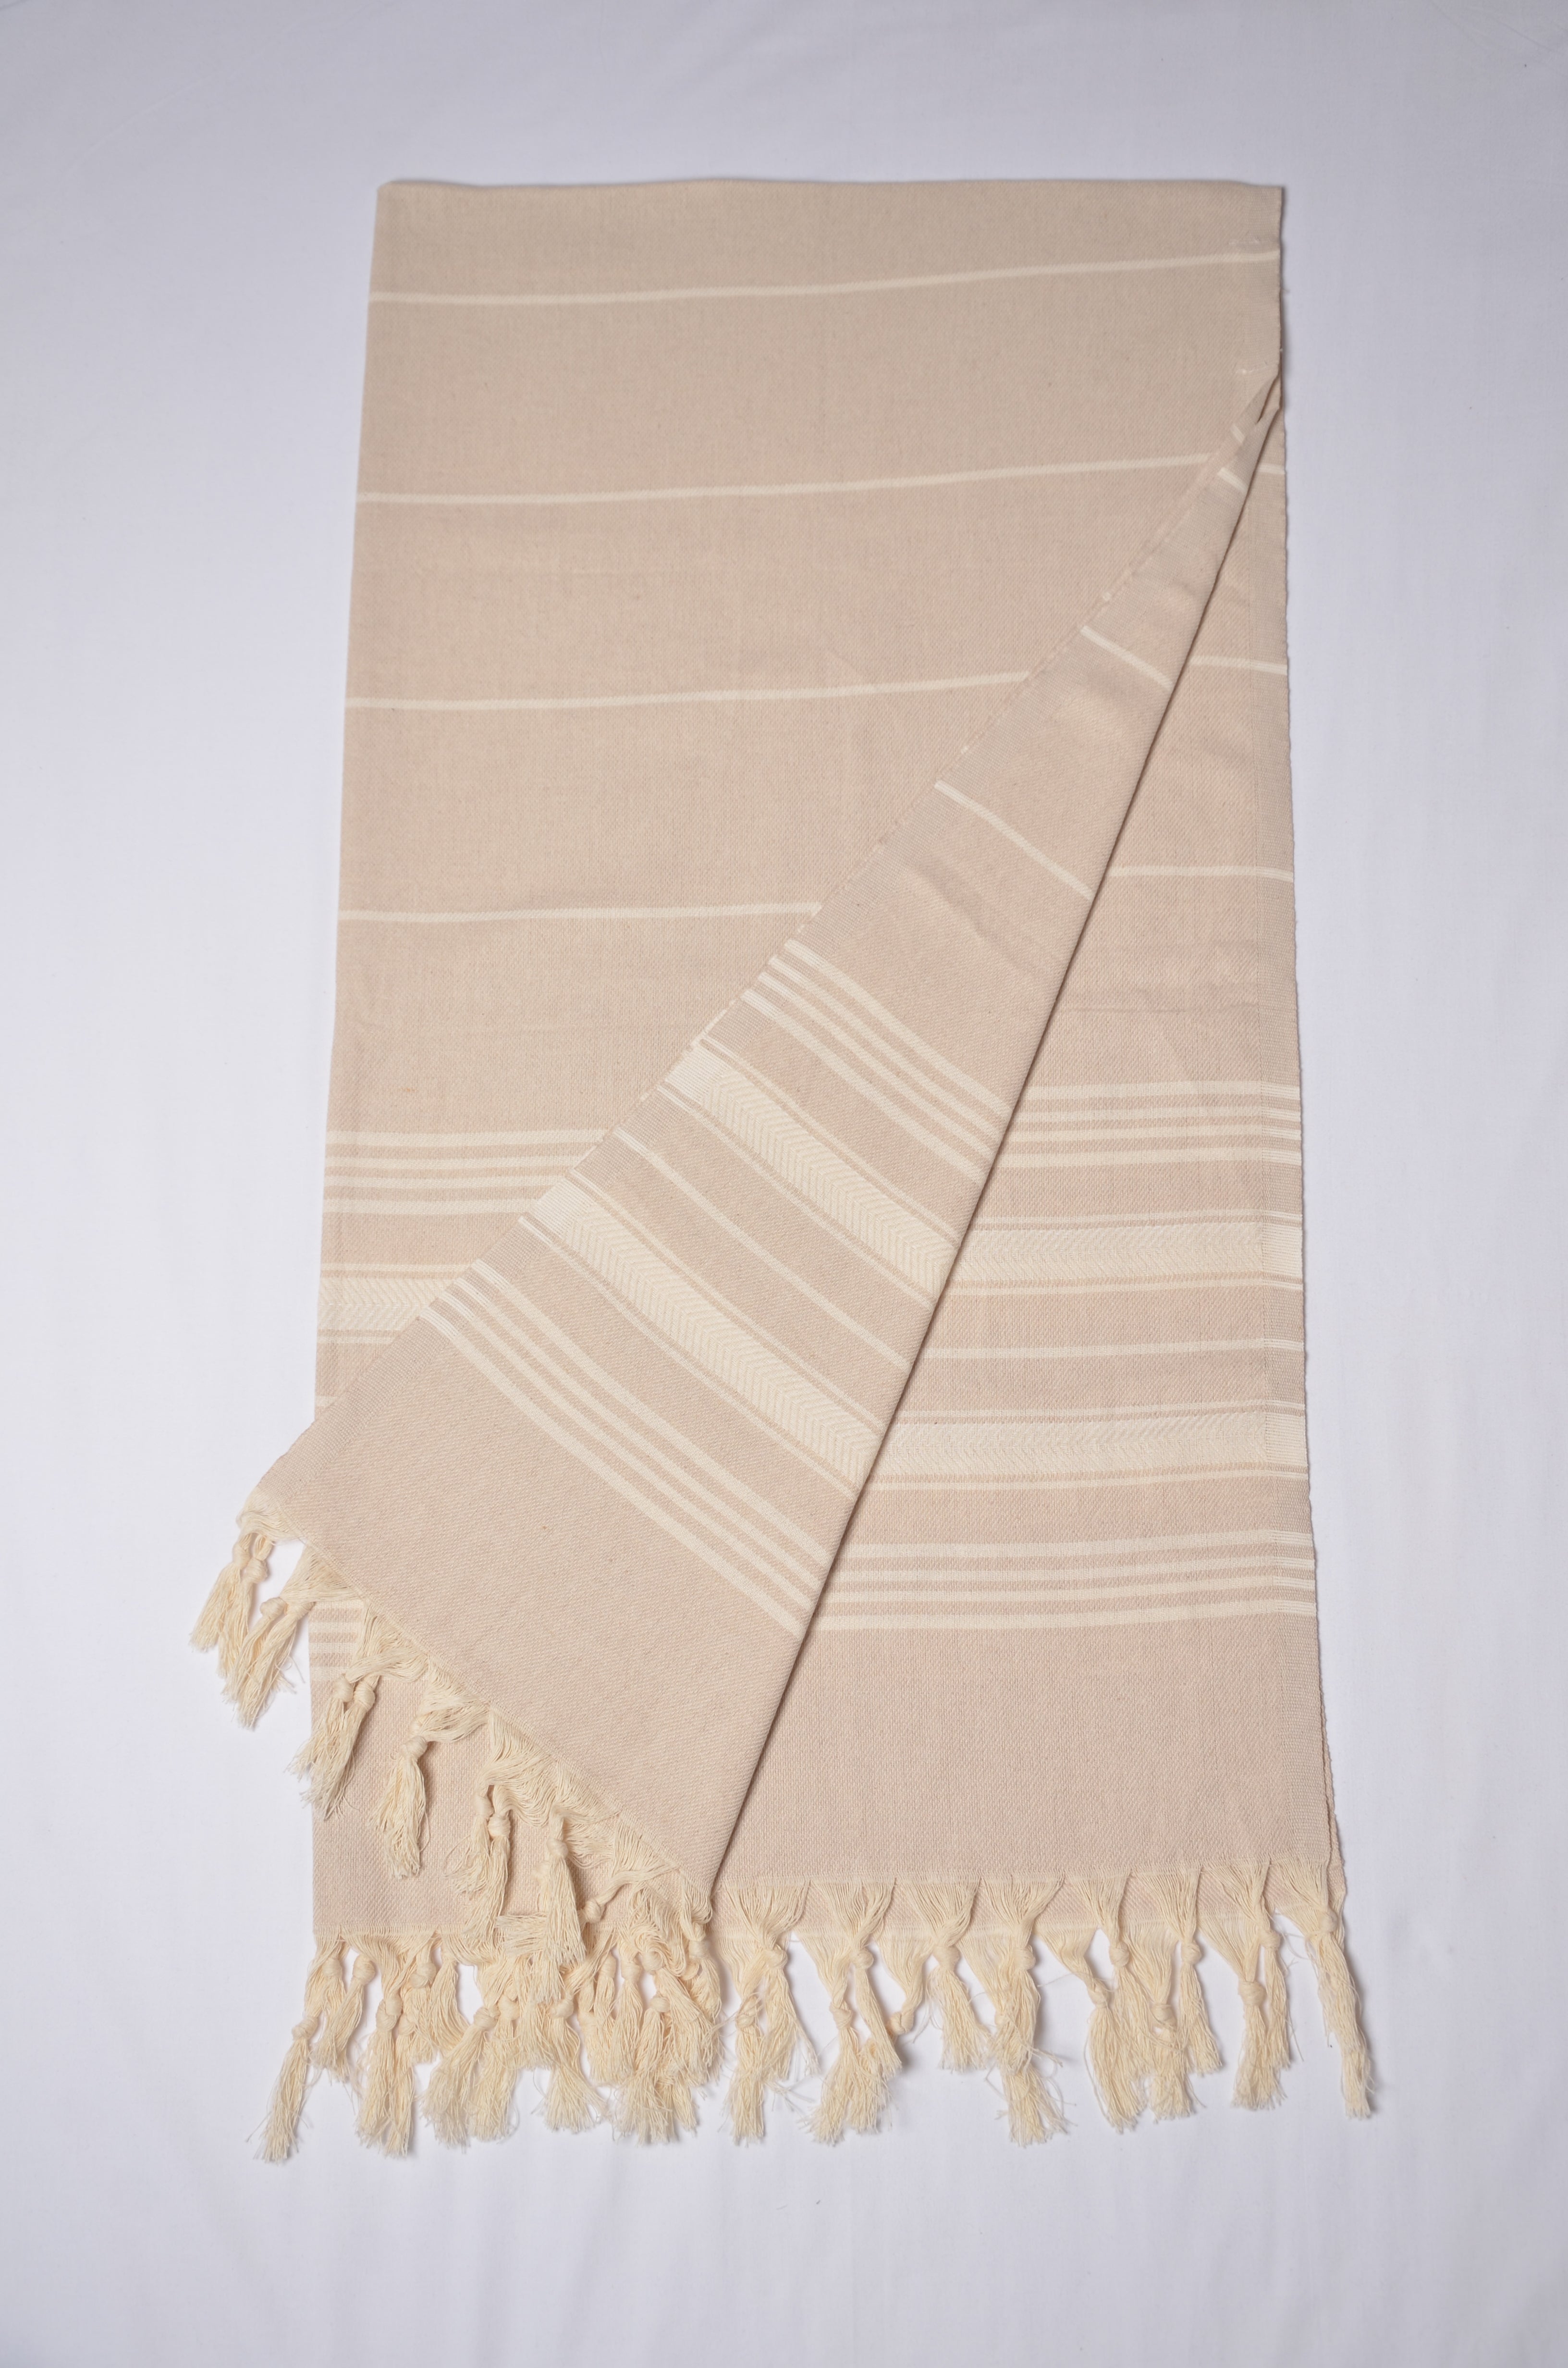 Basak Turkish Towels - [Bath & Beach Towel, Picnic Blanket] - Premium Cotton Turkish Beach Towel - Lightweight Picnic Blanket - KAFTHAN